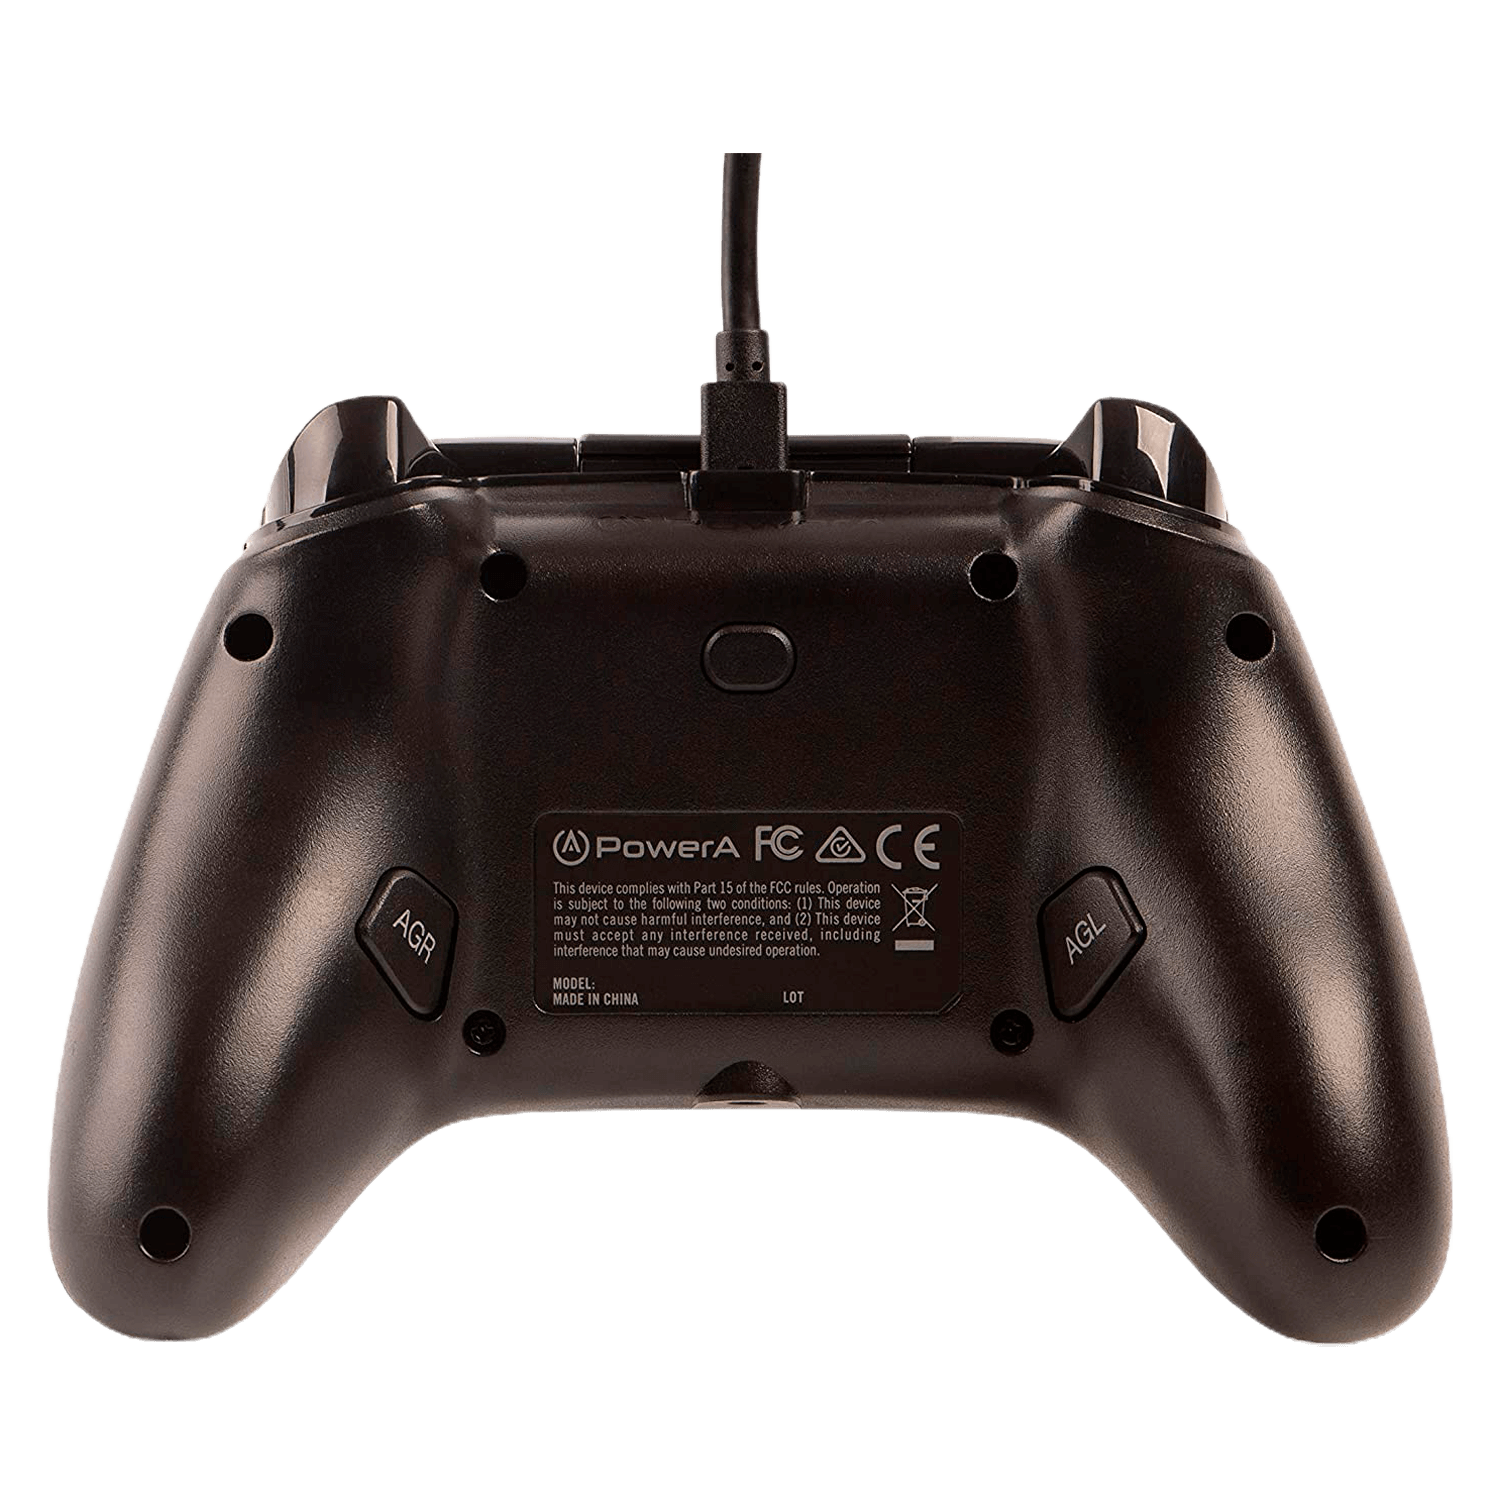 Controle PowerA Enhanced Wired para Xbox One - Nebula (PWA-A-02690)